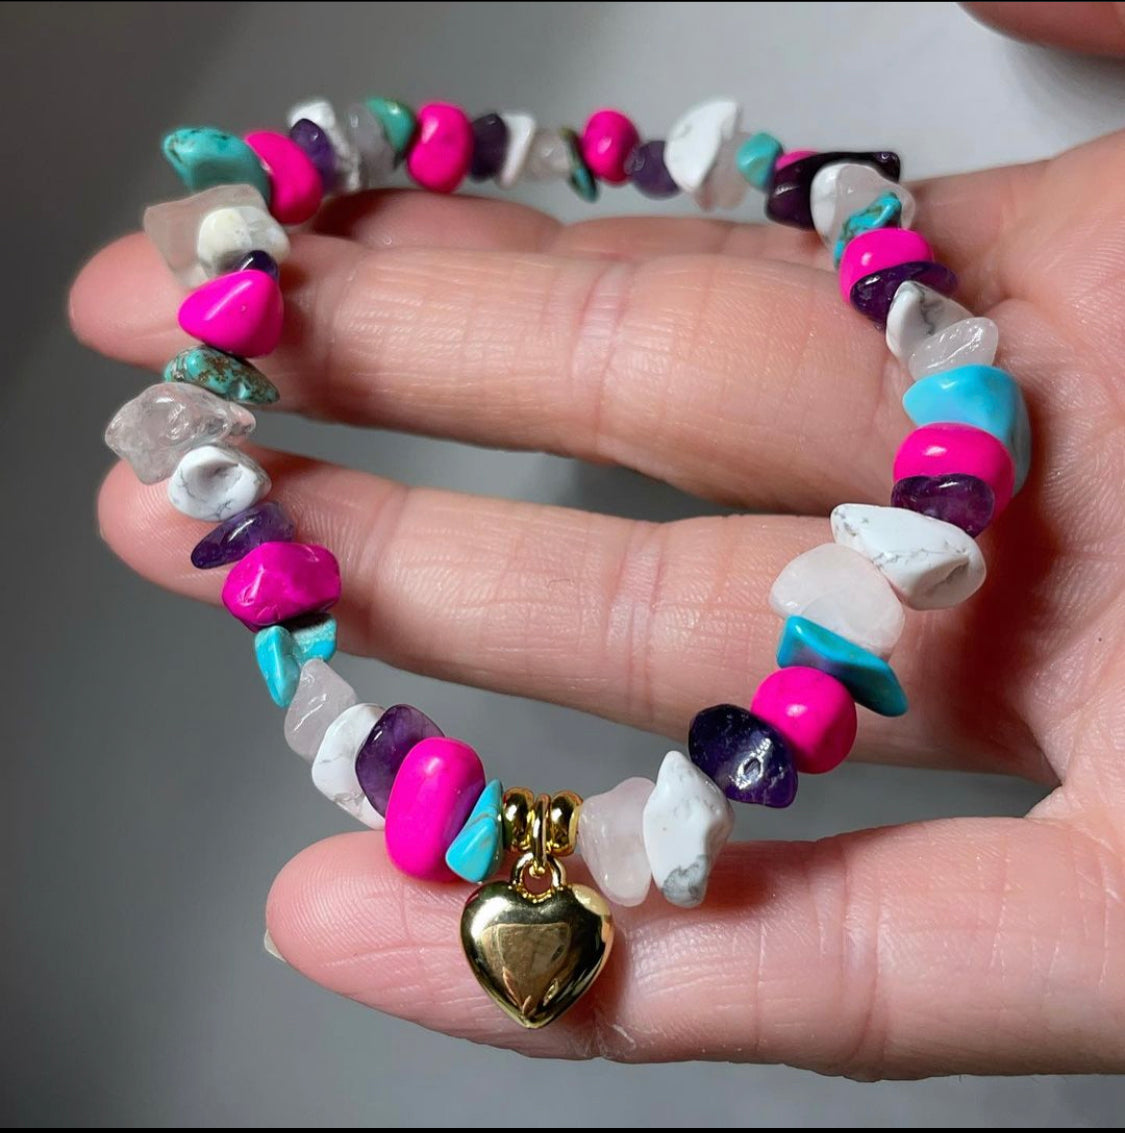 Crystal heart charm bracelet hot pink magnesite turquoise amethyst howlite and rose Quartz